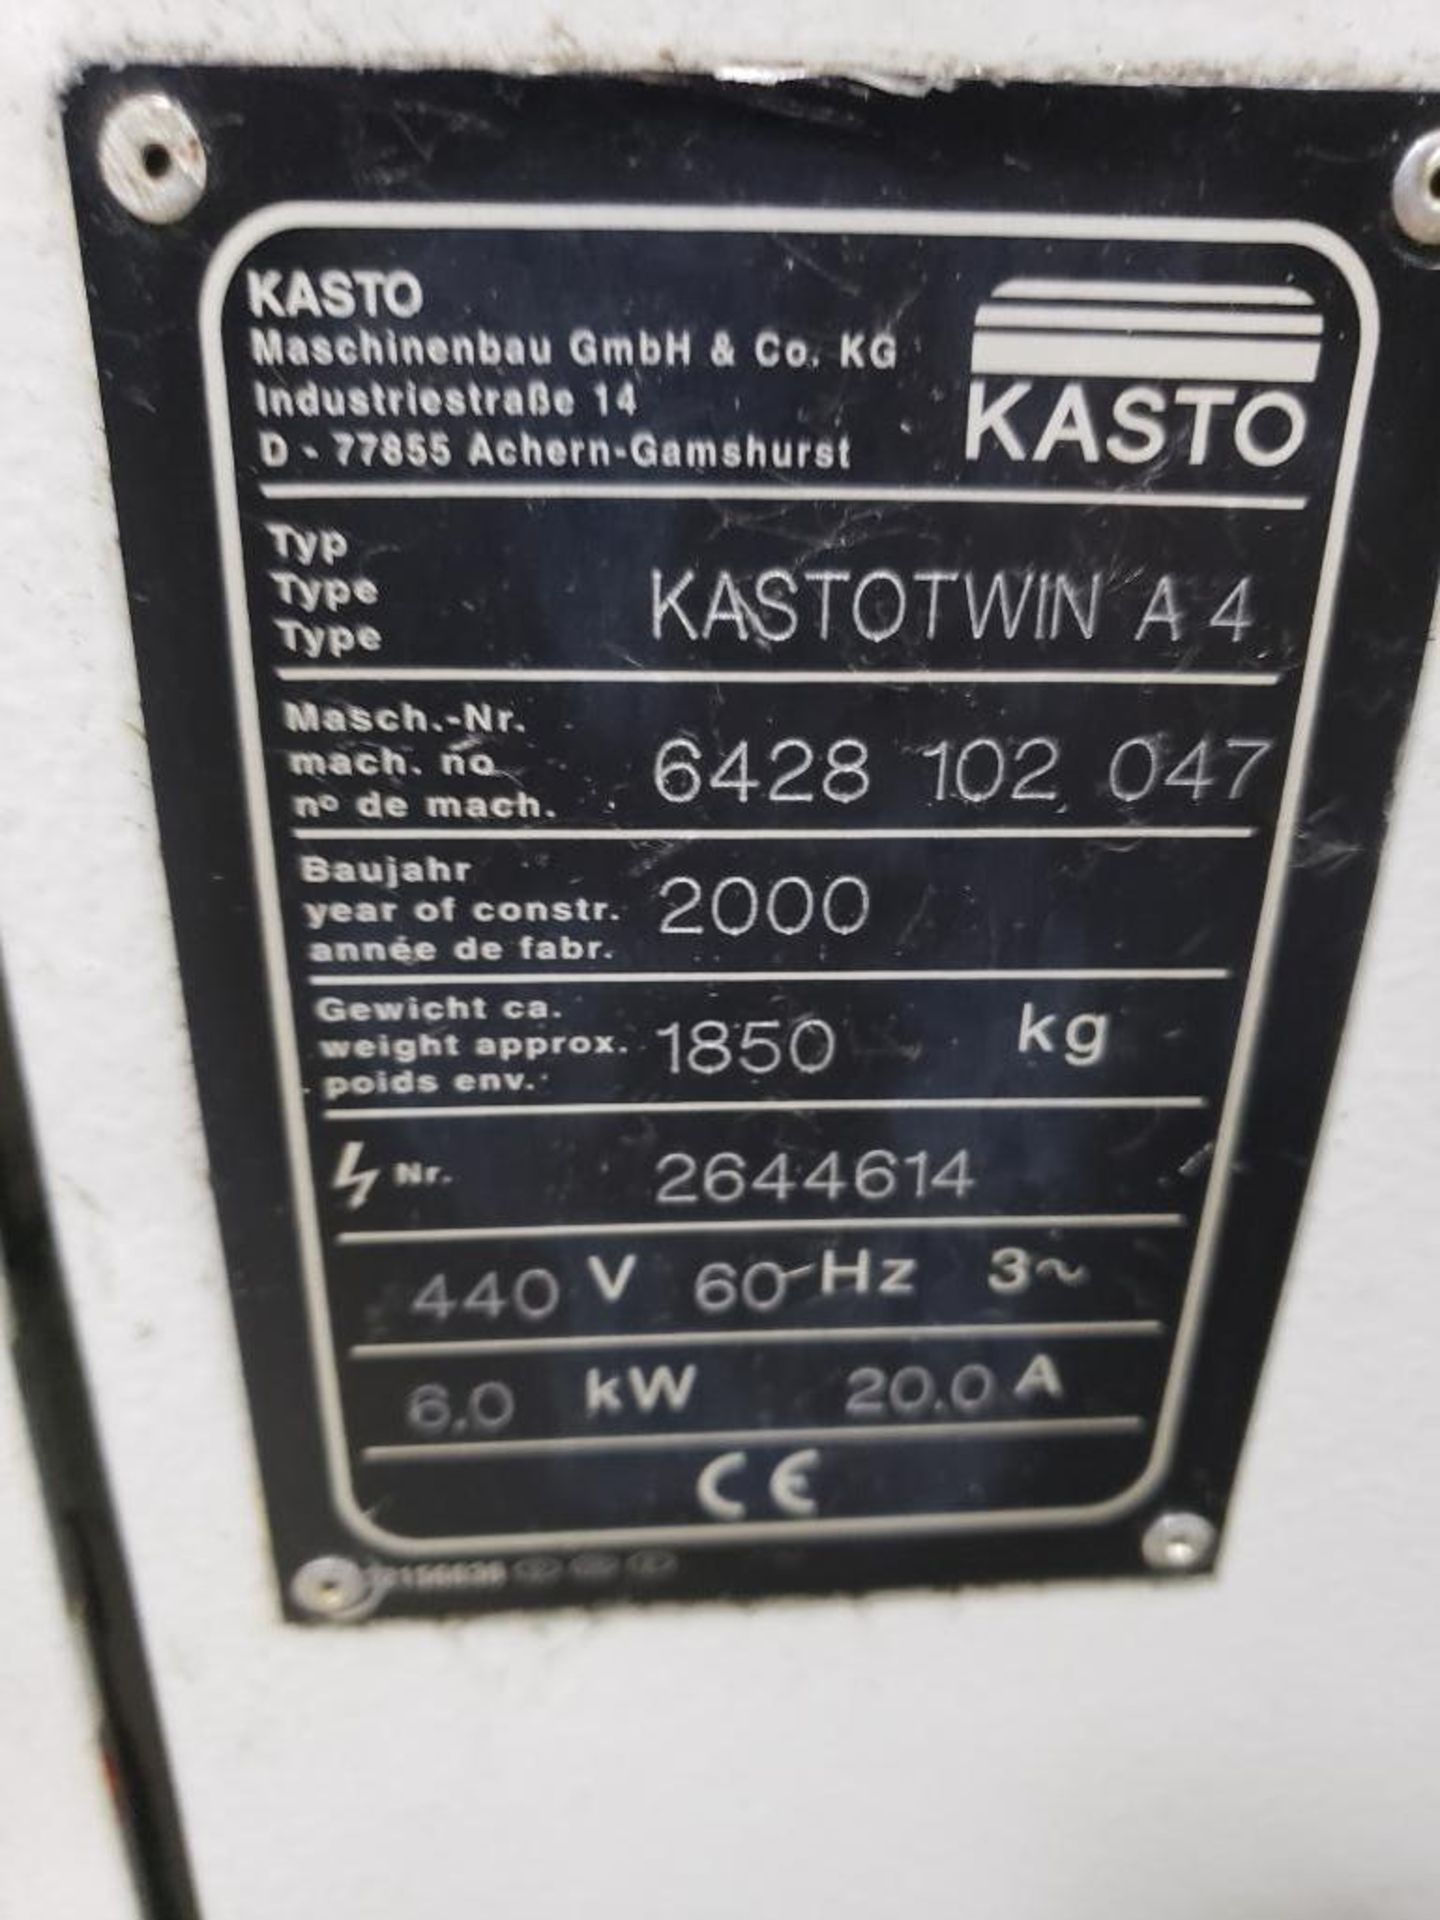 Kasto horizontal CNC band saw Model Kastotwin A4, 3 phase 440v, Mfg year 2000. Serial # 6428102047. - Bild 17 aus 32